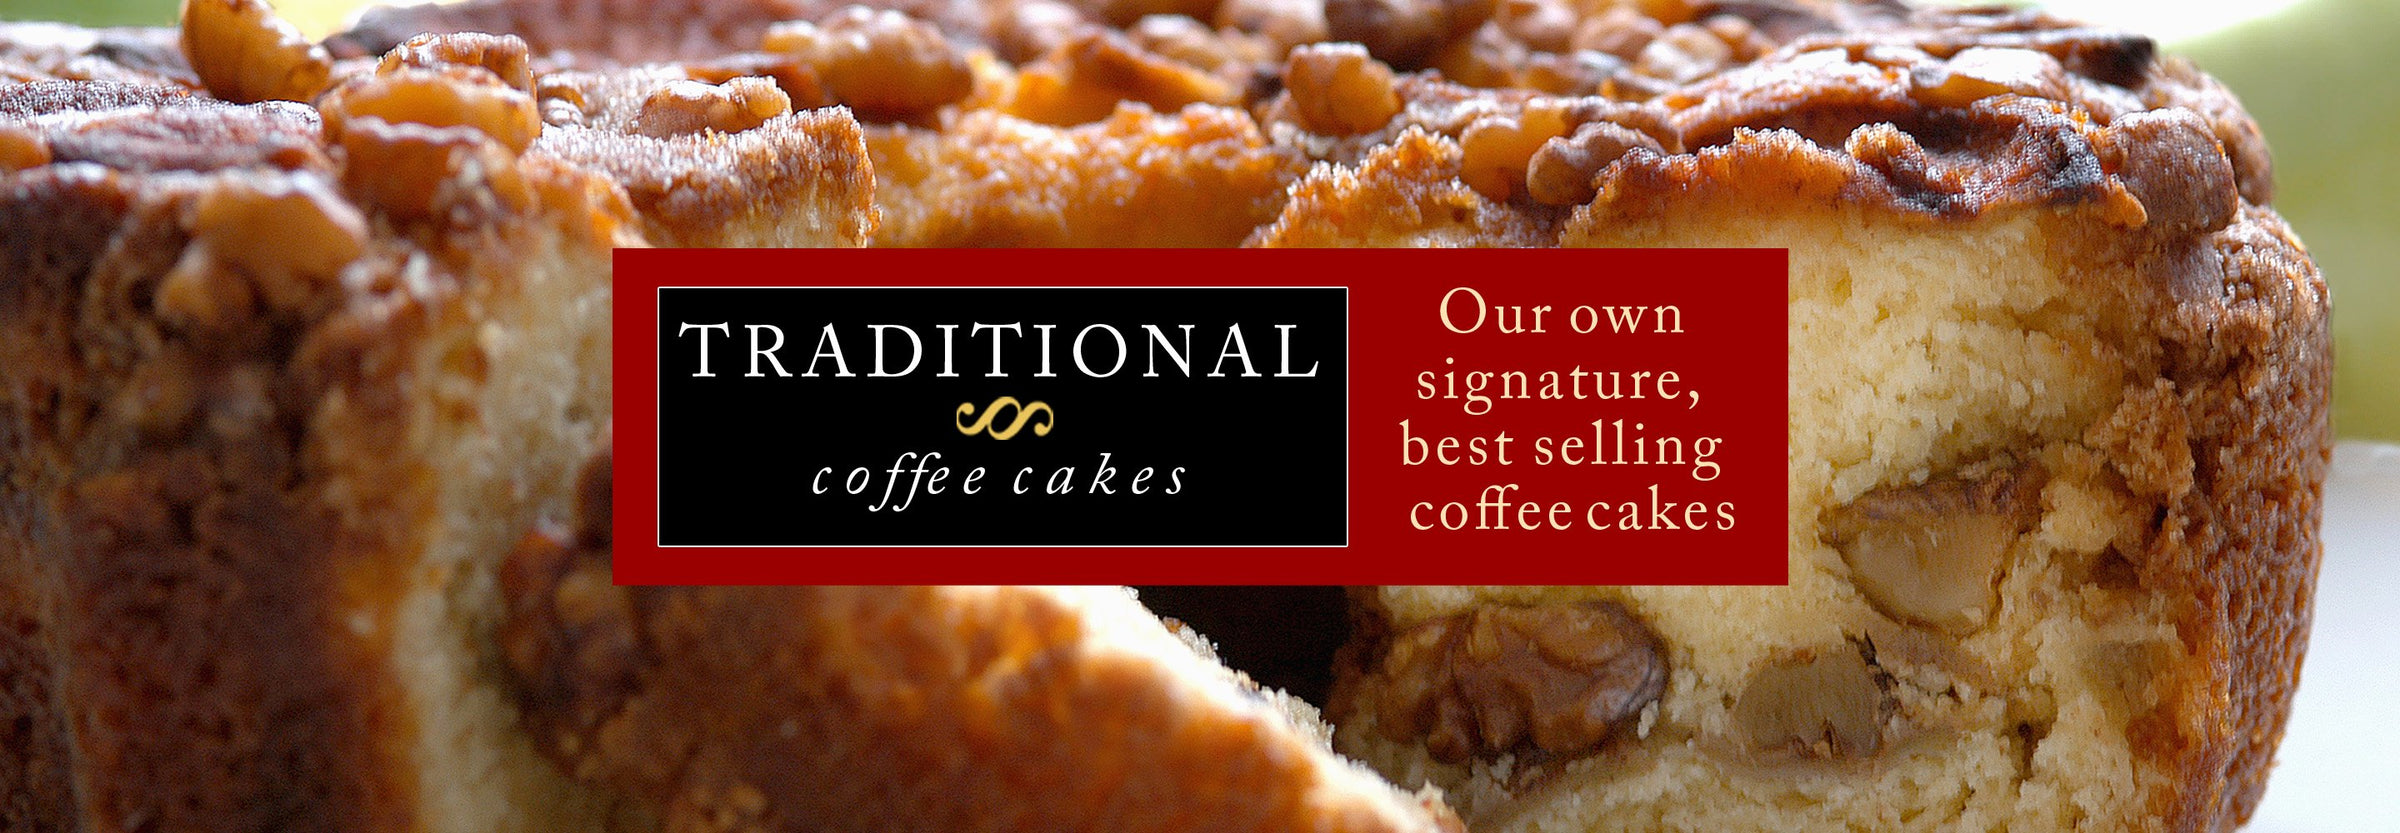 CoffeeCakes.com Signature Coffee Cakes